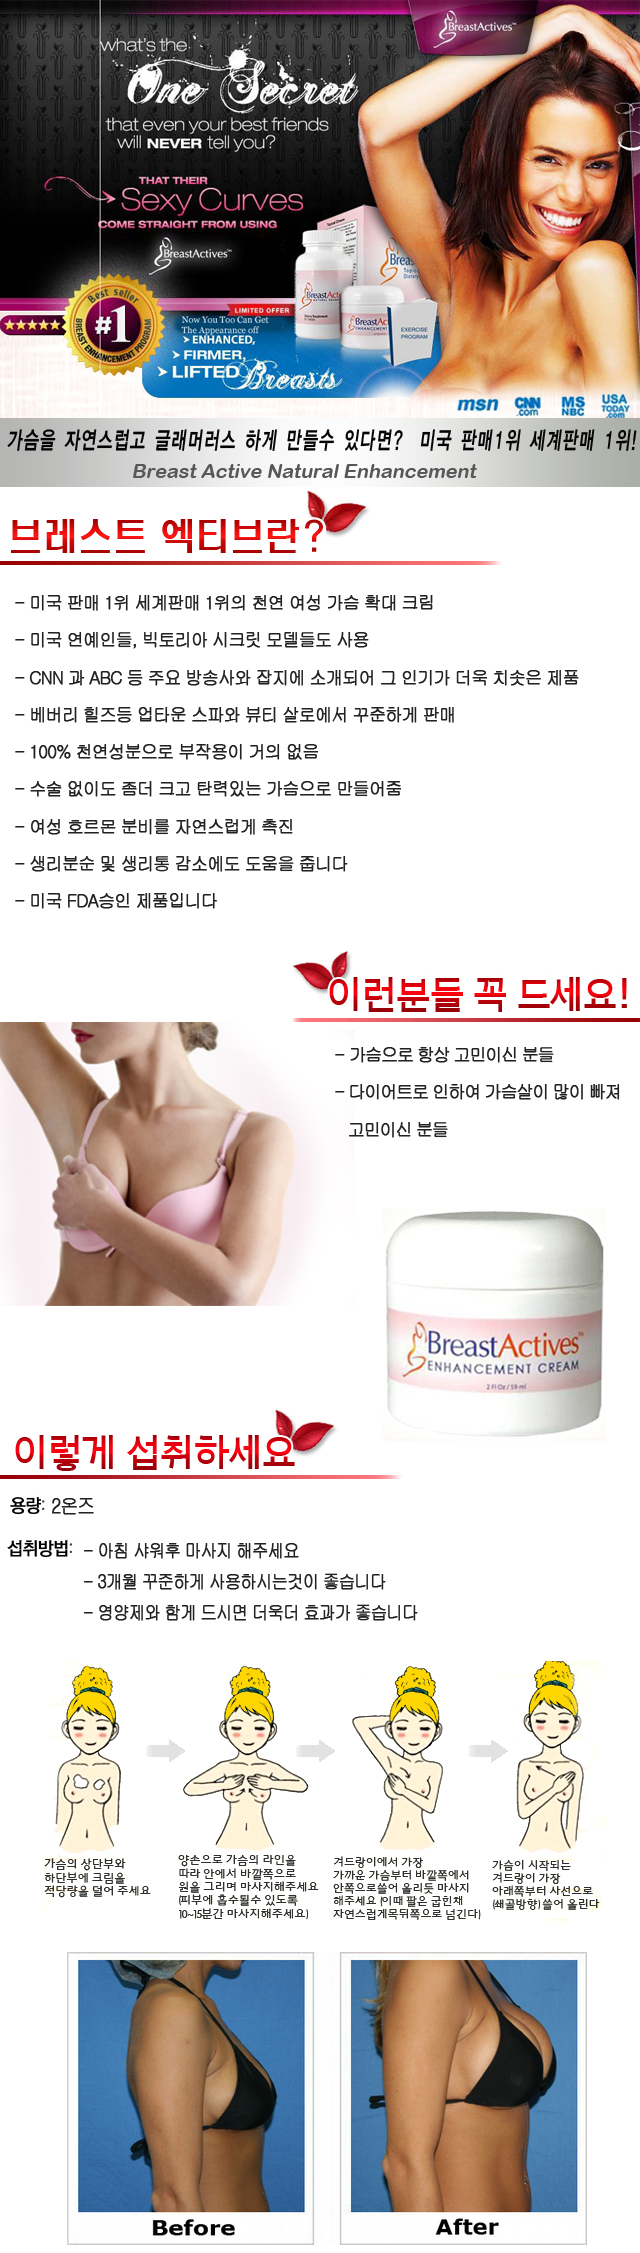 breast active explain.jpg